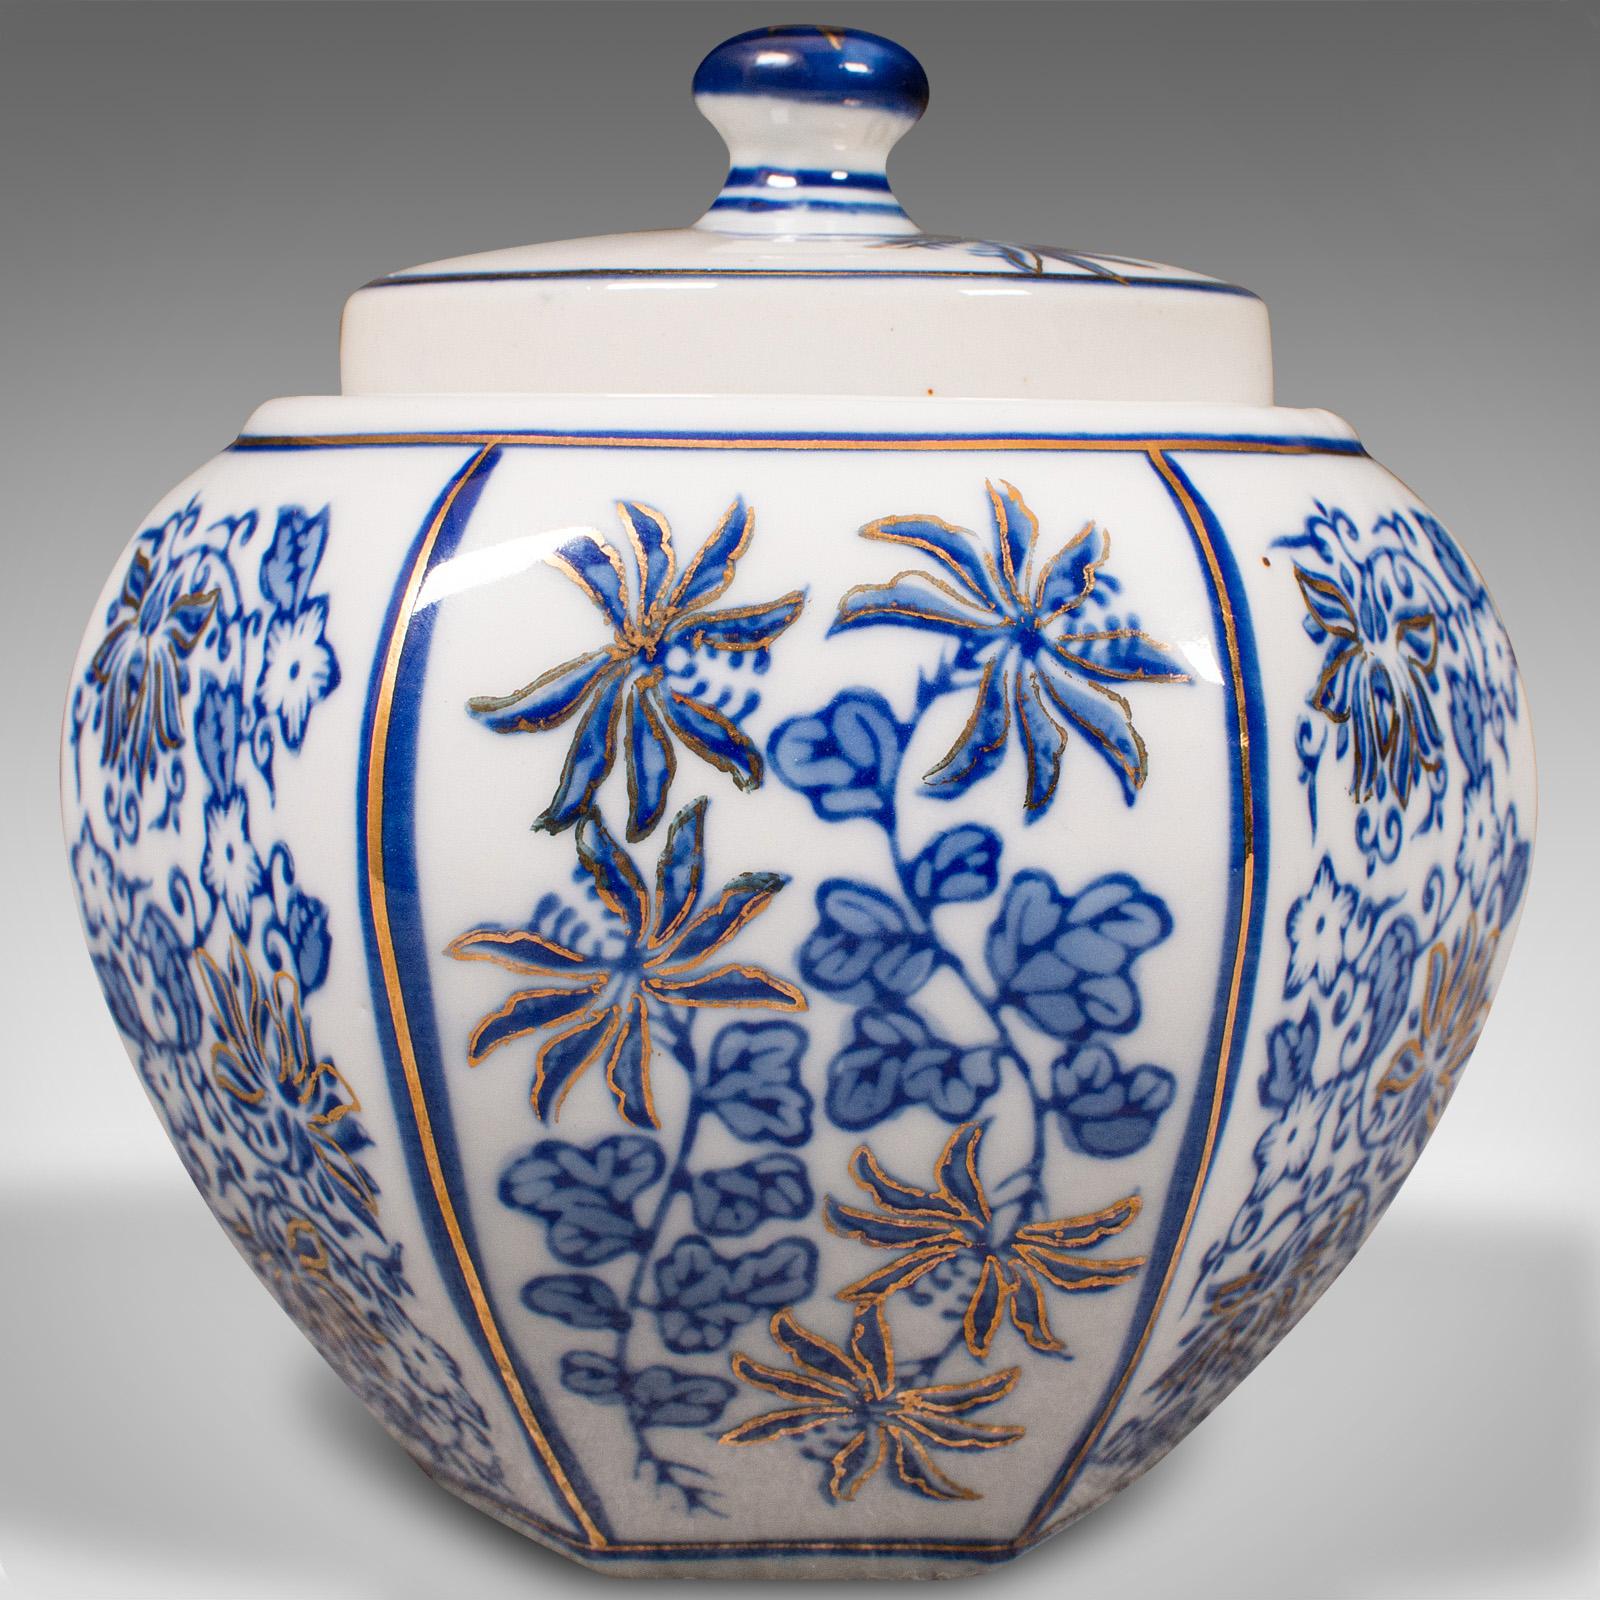 Vintage Blue and White Spice Jar, Chinese, Ceramic, Decorative Pot, Art Deco For Sale 4